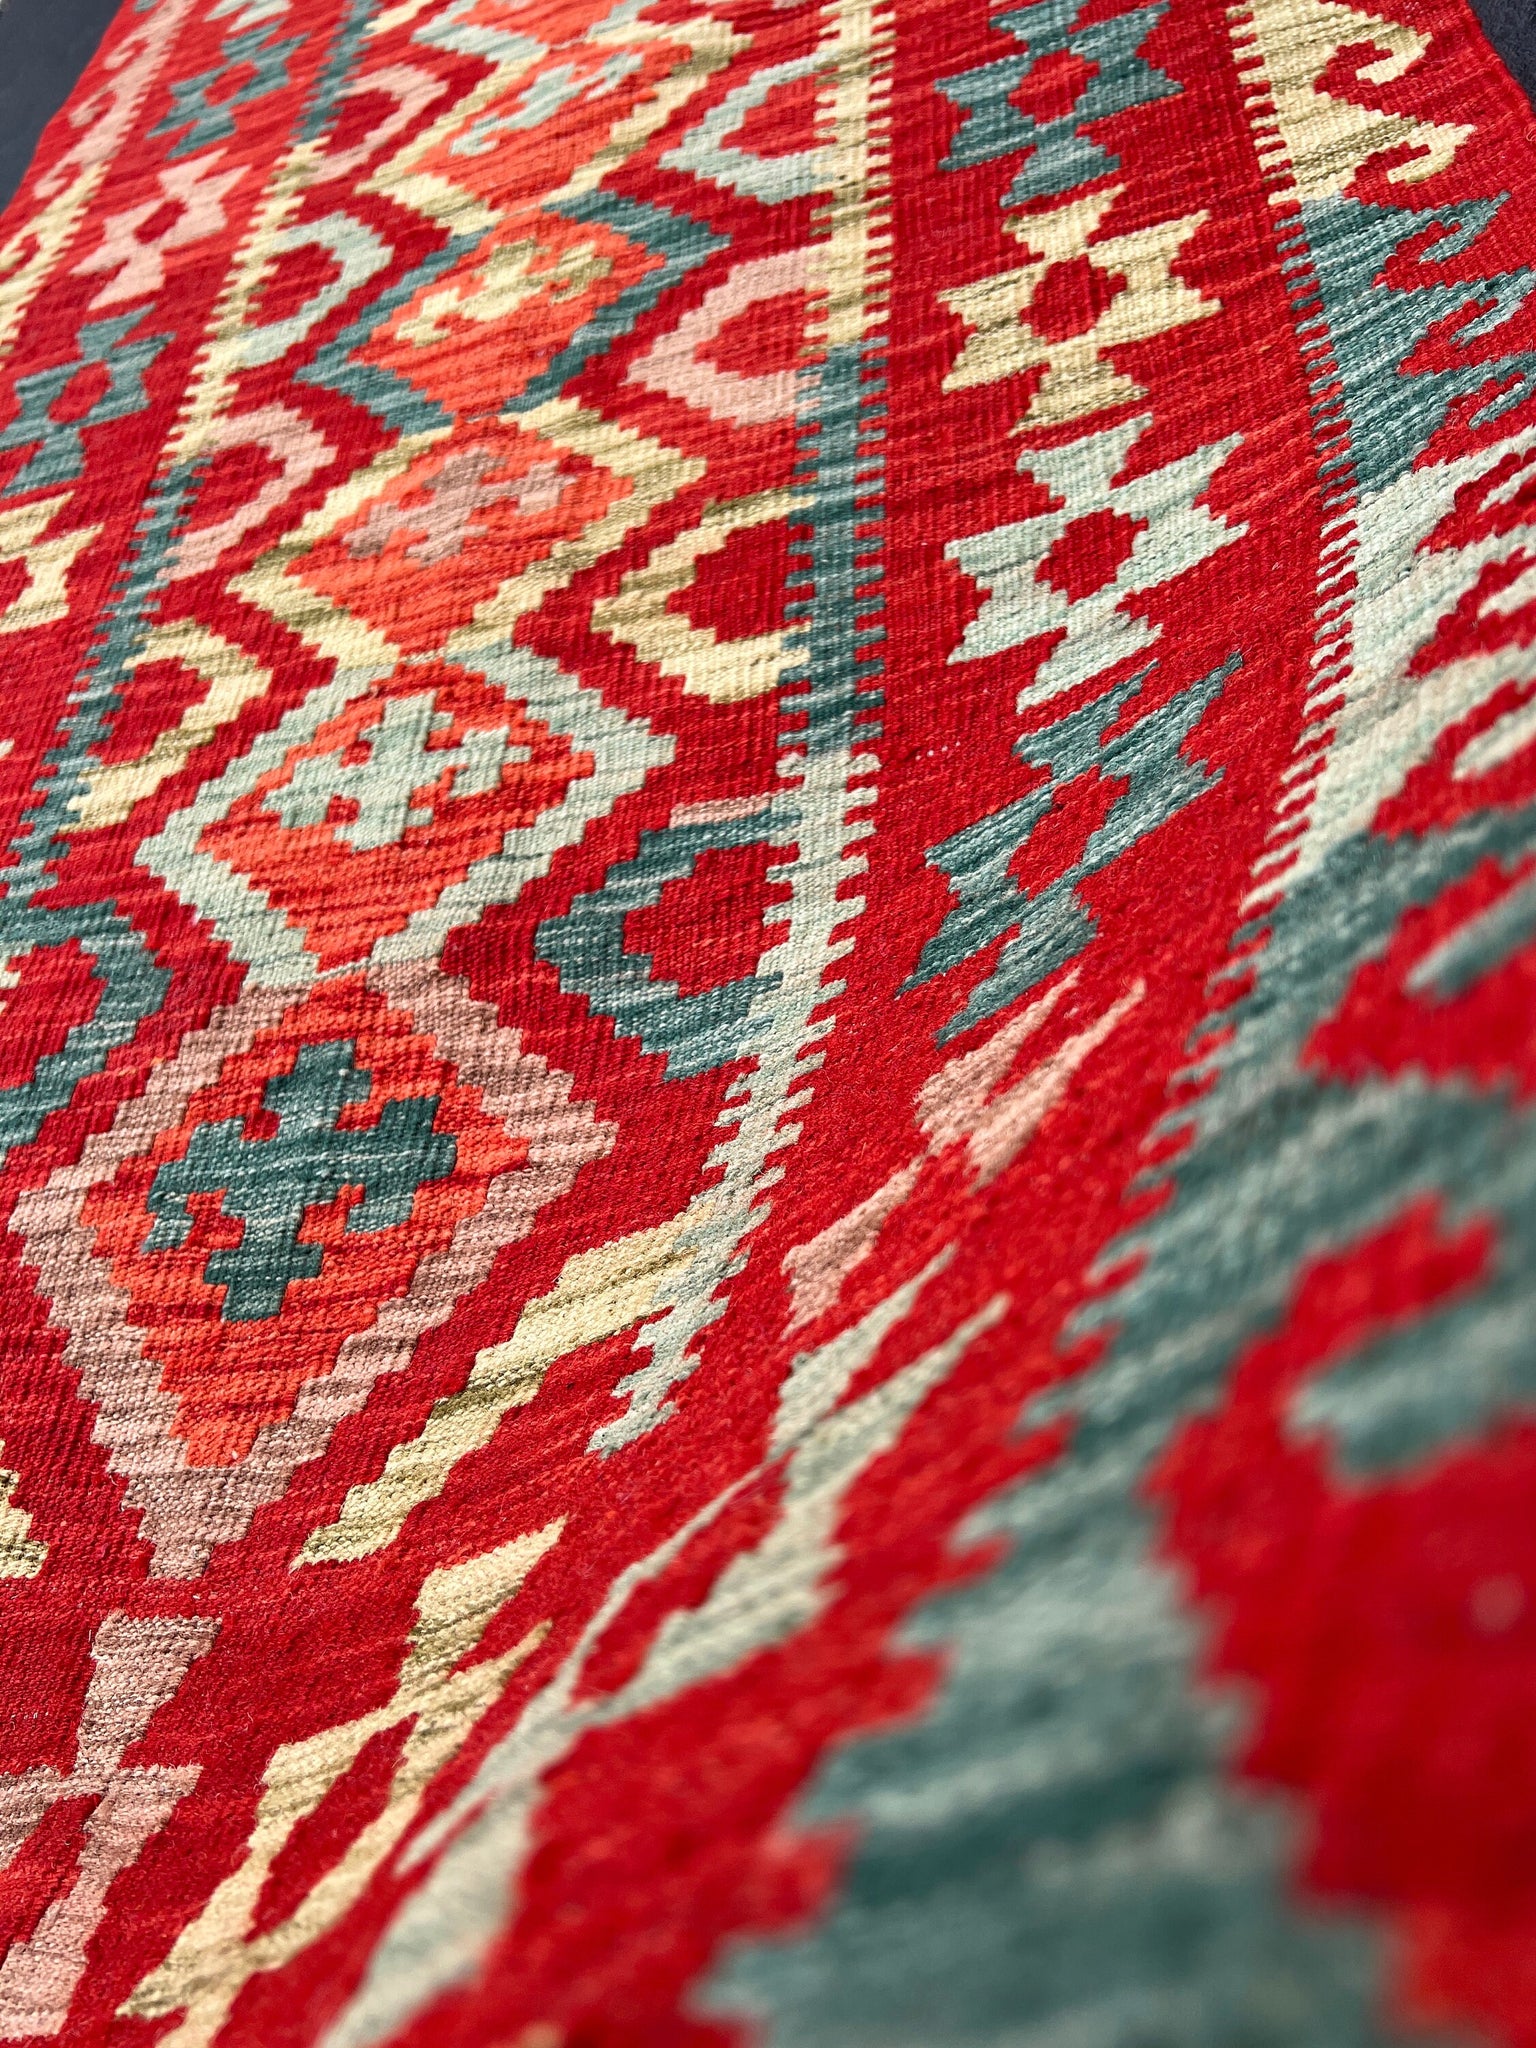 3x7 (91x213) Handmade Afghan Kilim Runner Rug | Crimson Blood Red Maroon Orange Forest Mint Green Cornsilk Yellow | Wool Outdoor Boho